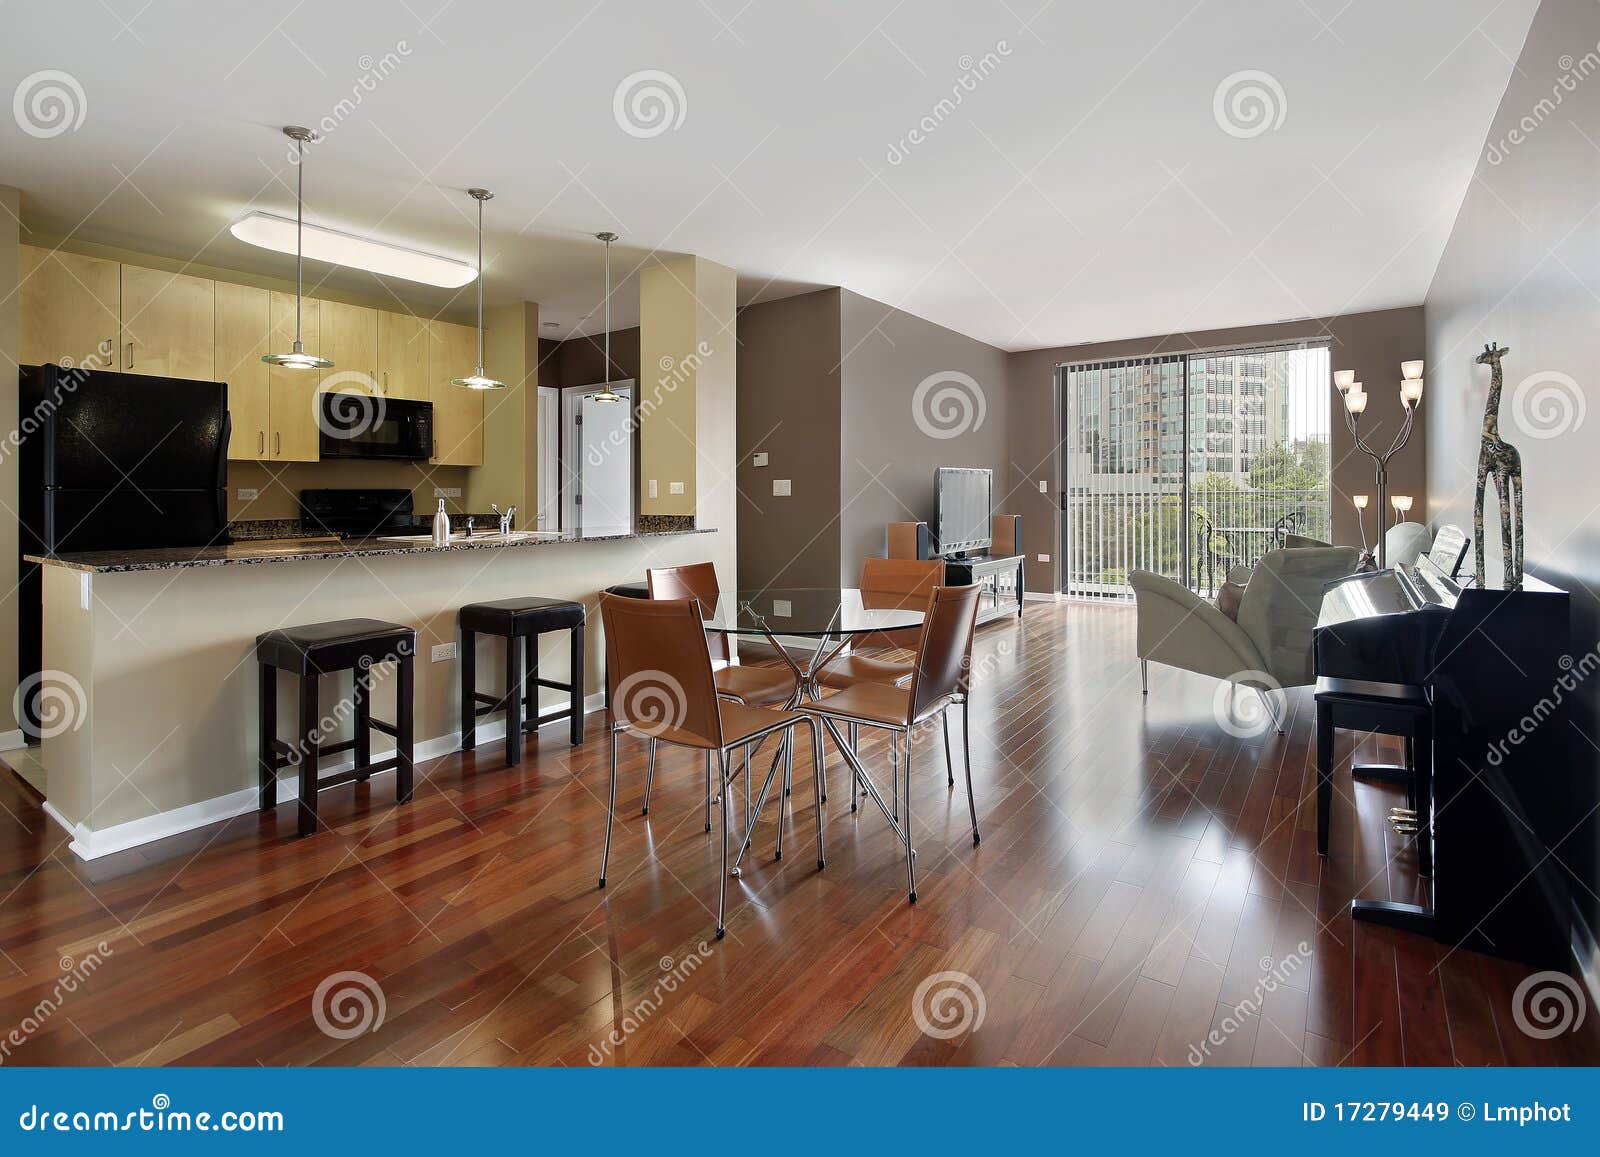 Condo with open floor plan stock image. Image of elegant 